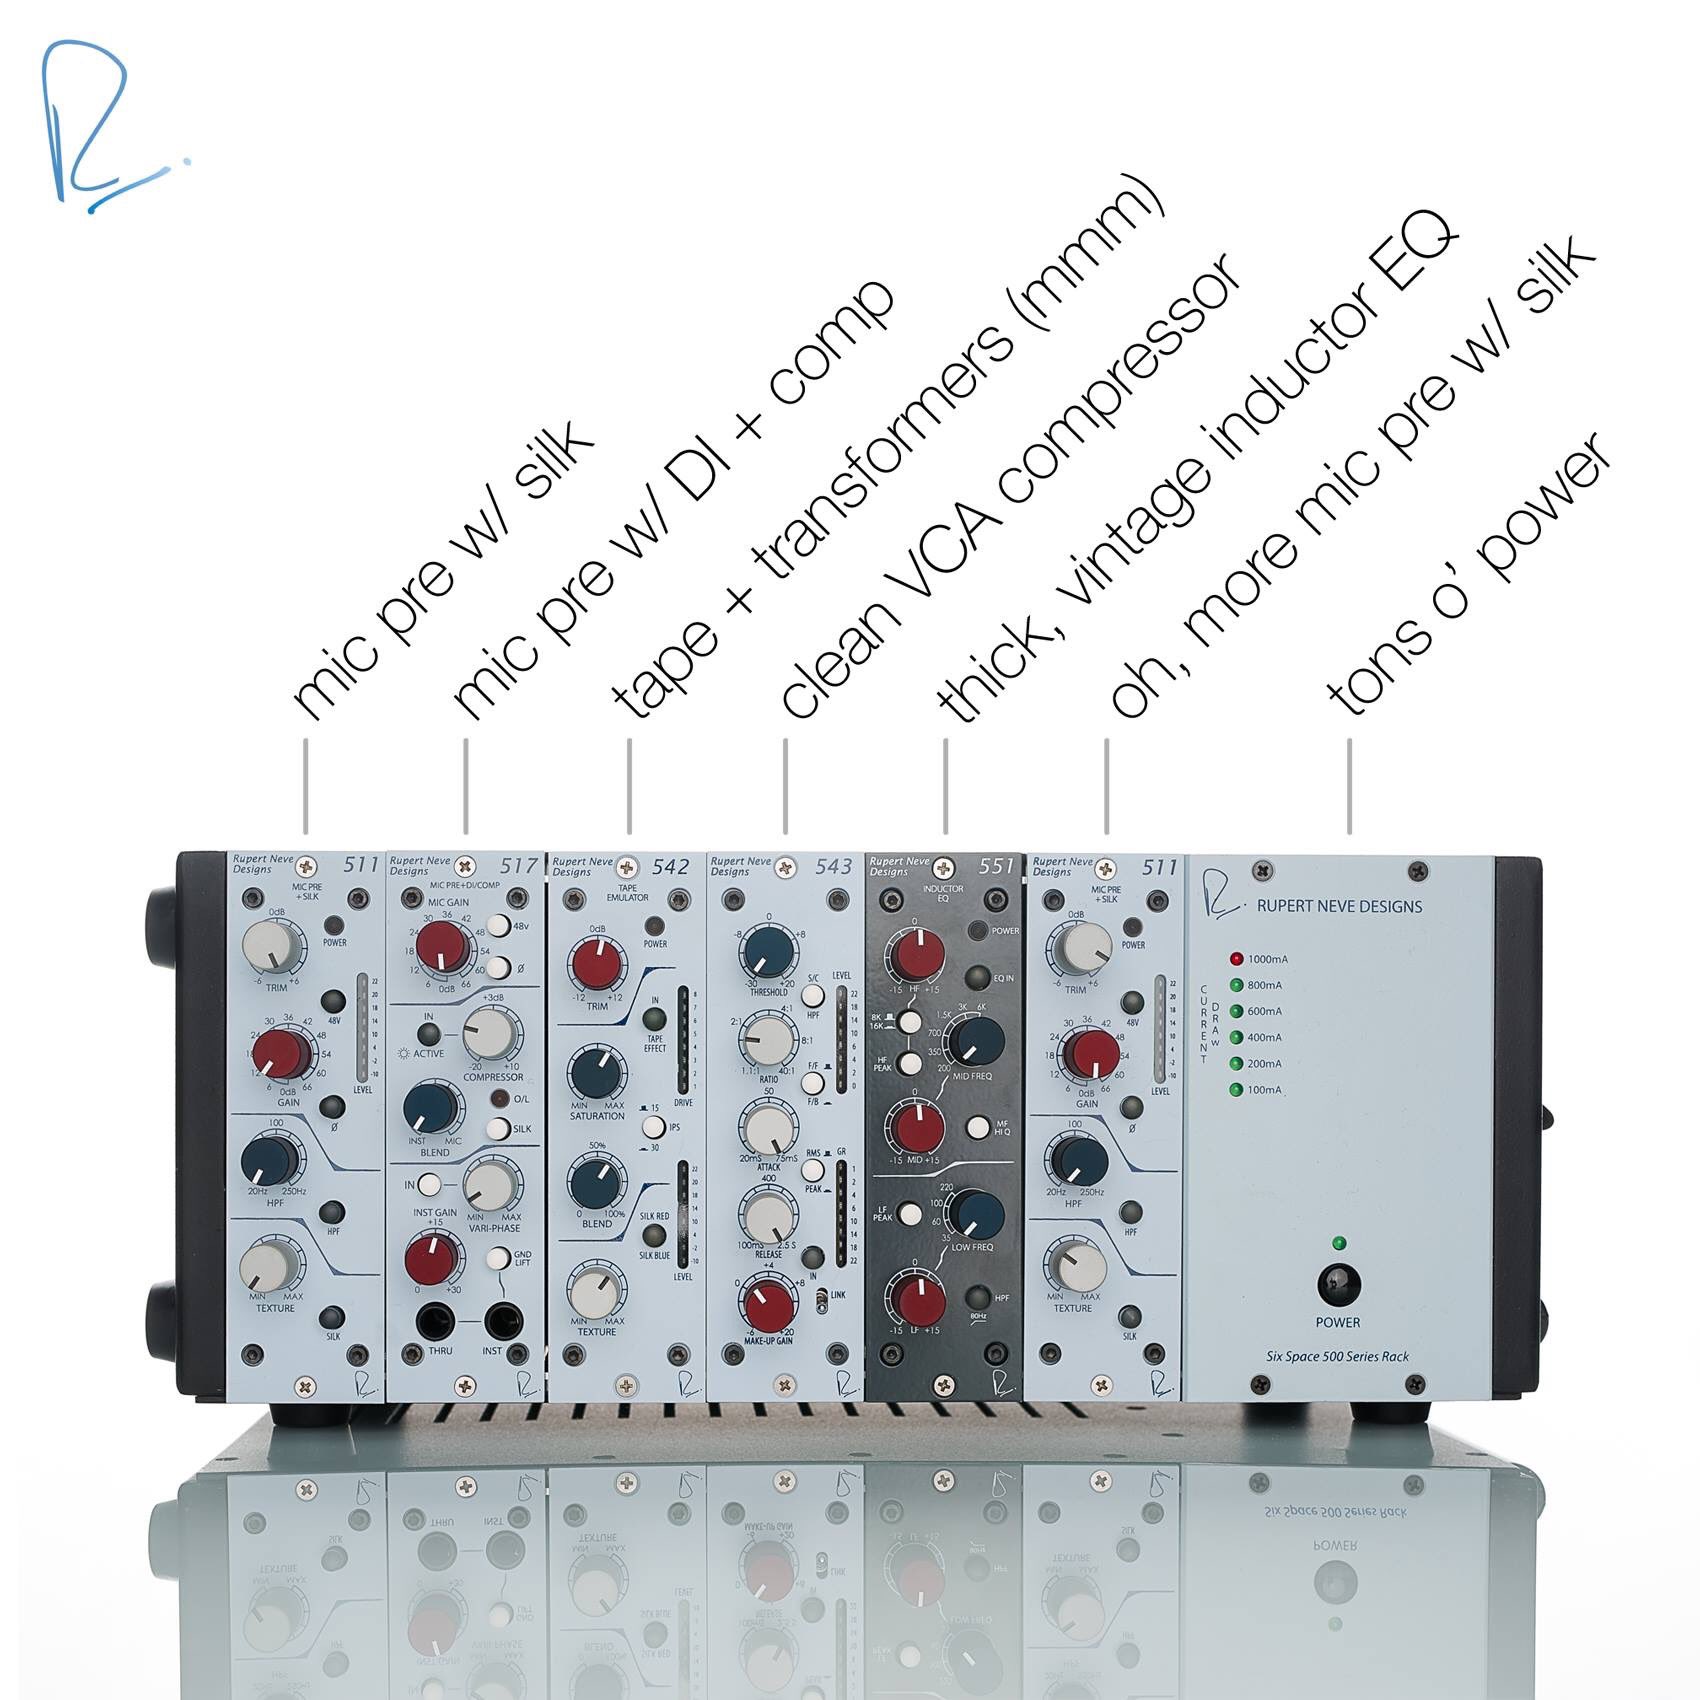 Rupert Neve Design Portico 517 - 500 Series - System 500 componenten - Variation 2